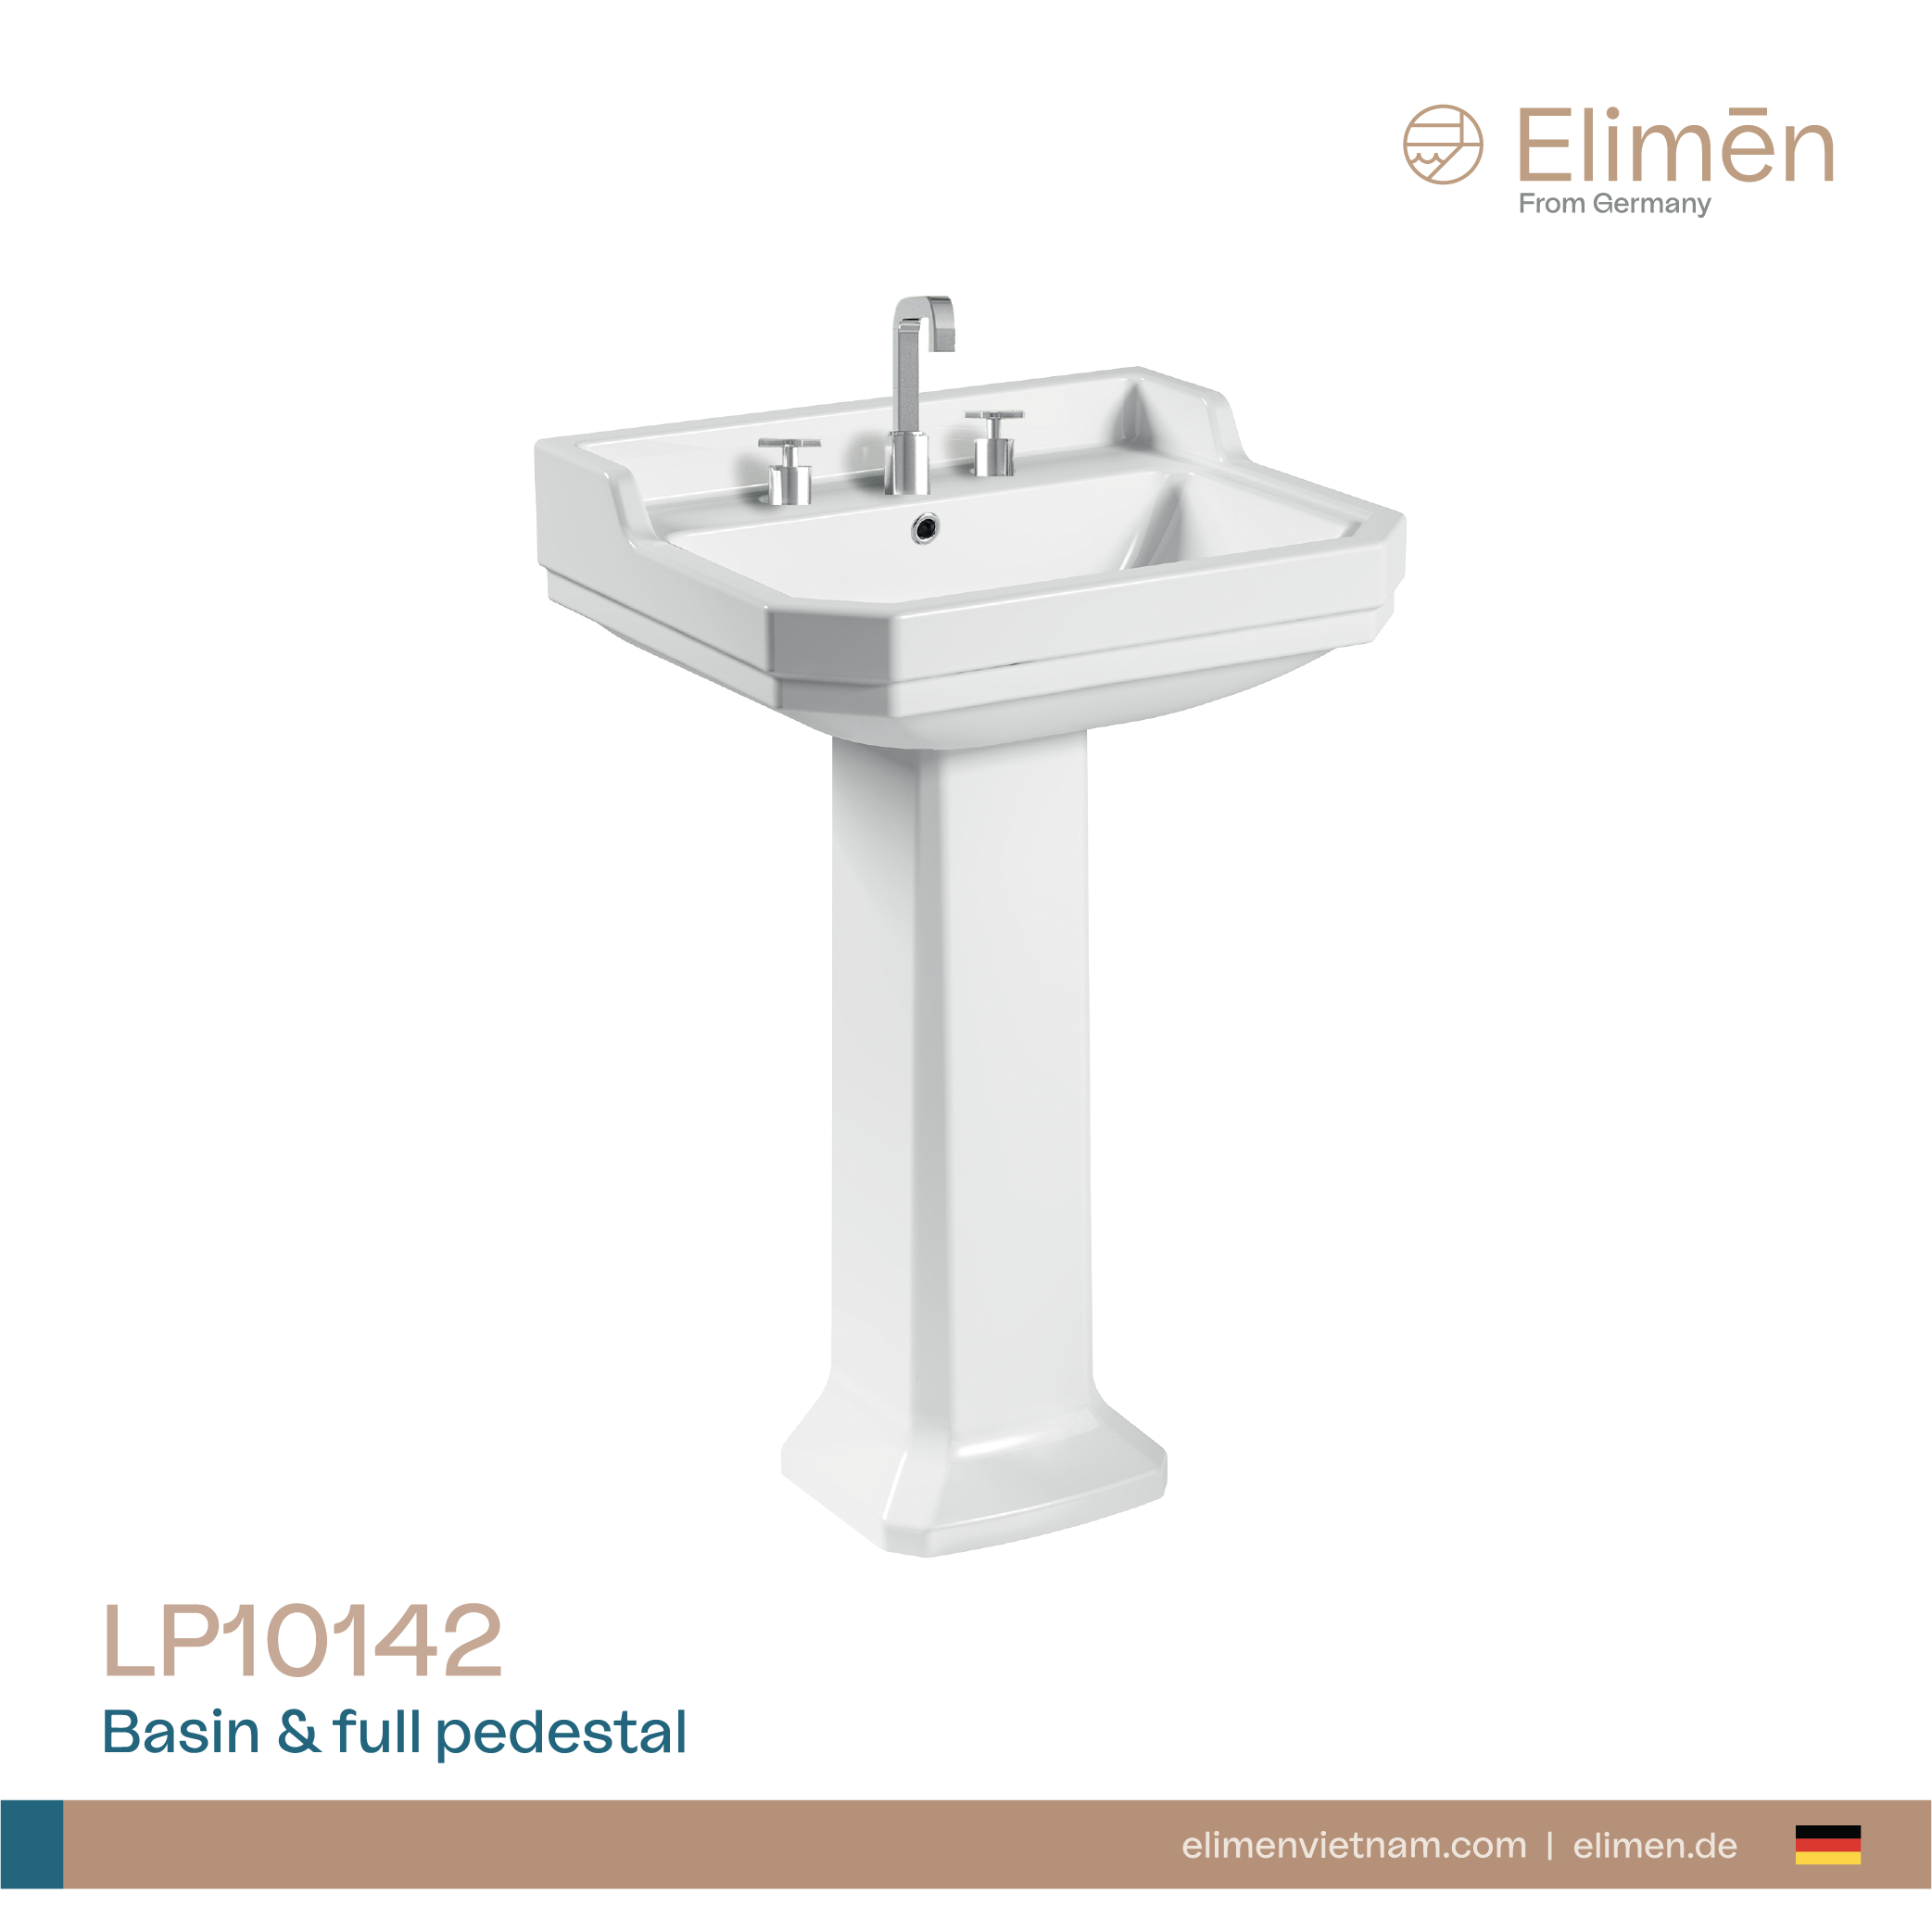 Elimen long-walled washbasin - Code LP10142